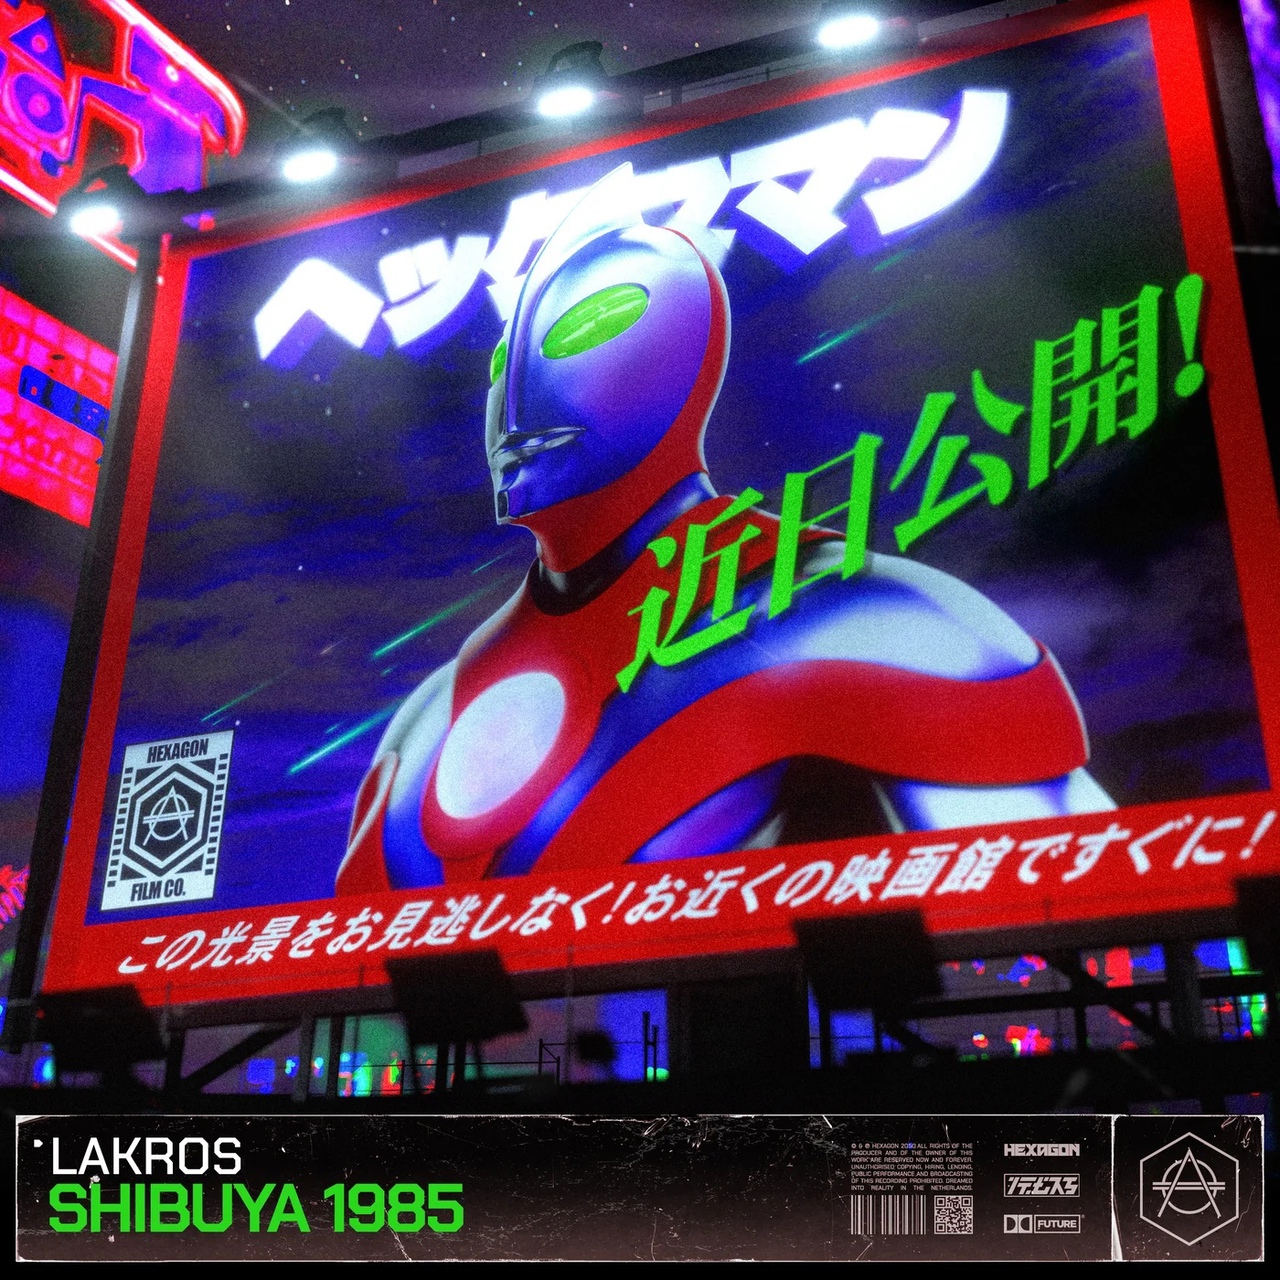 Lakros — Shibuya 1985 cover artwork